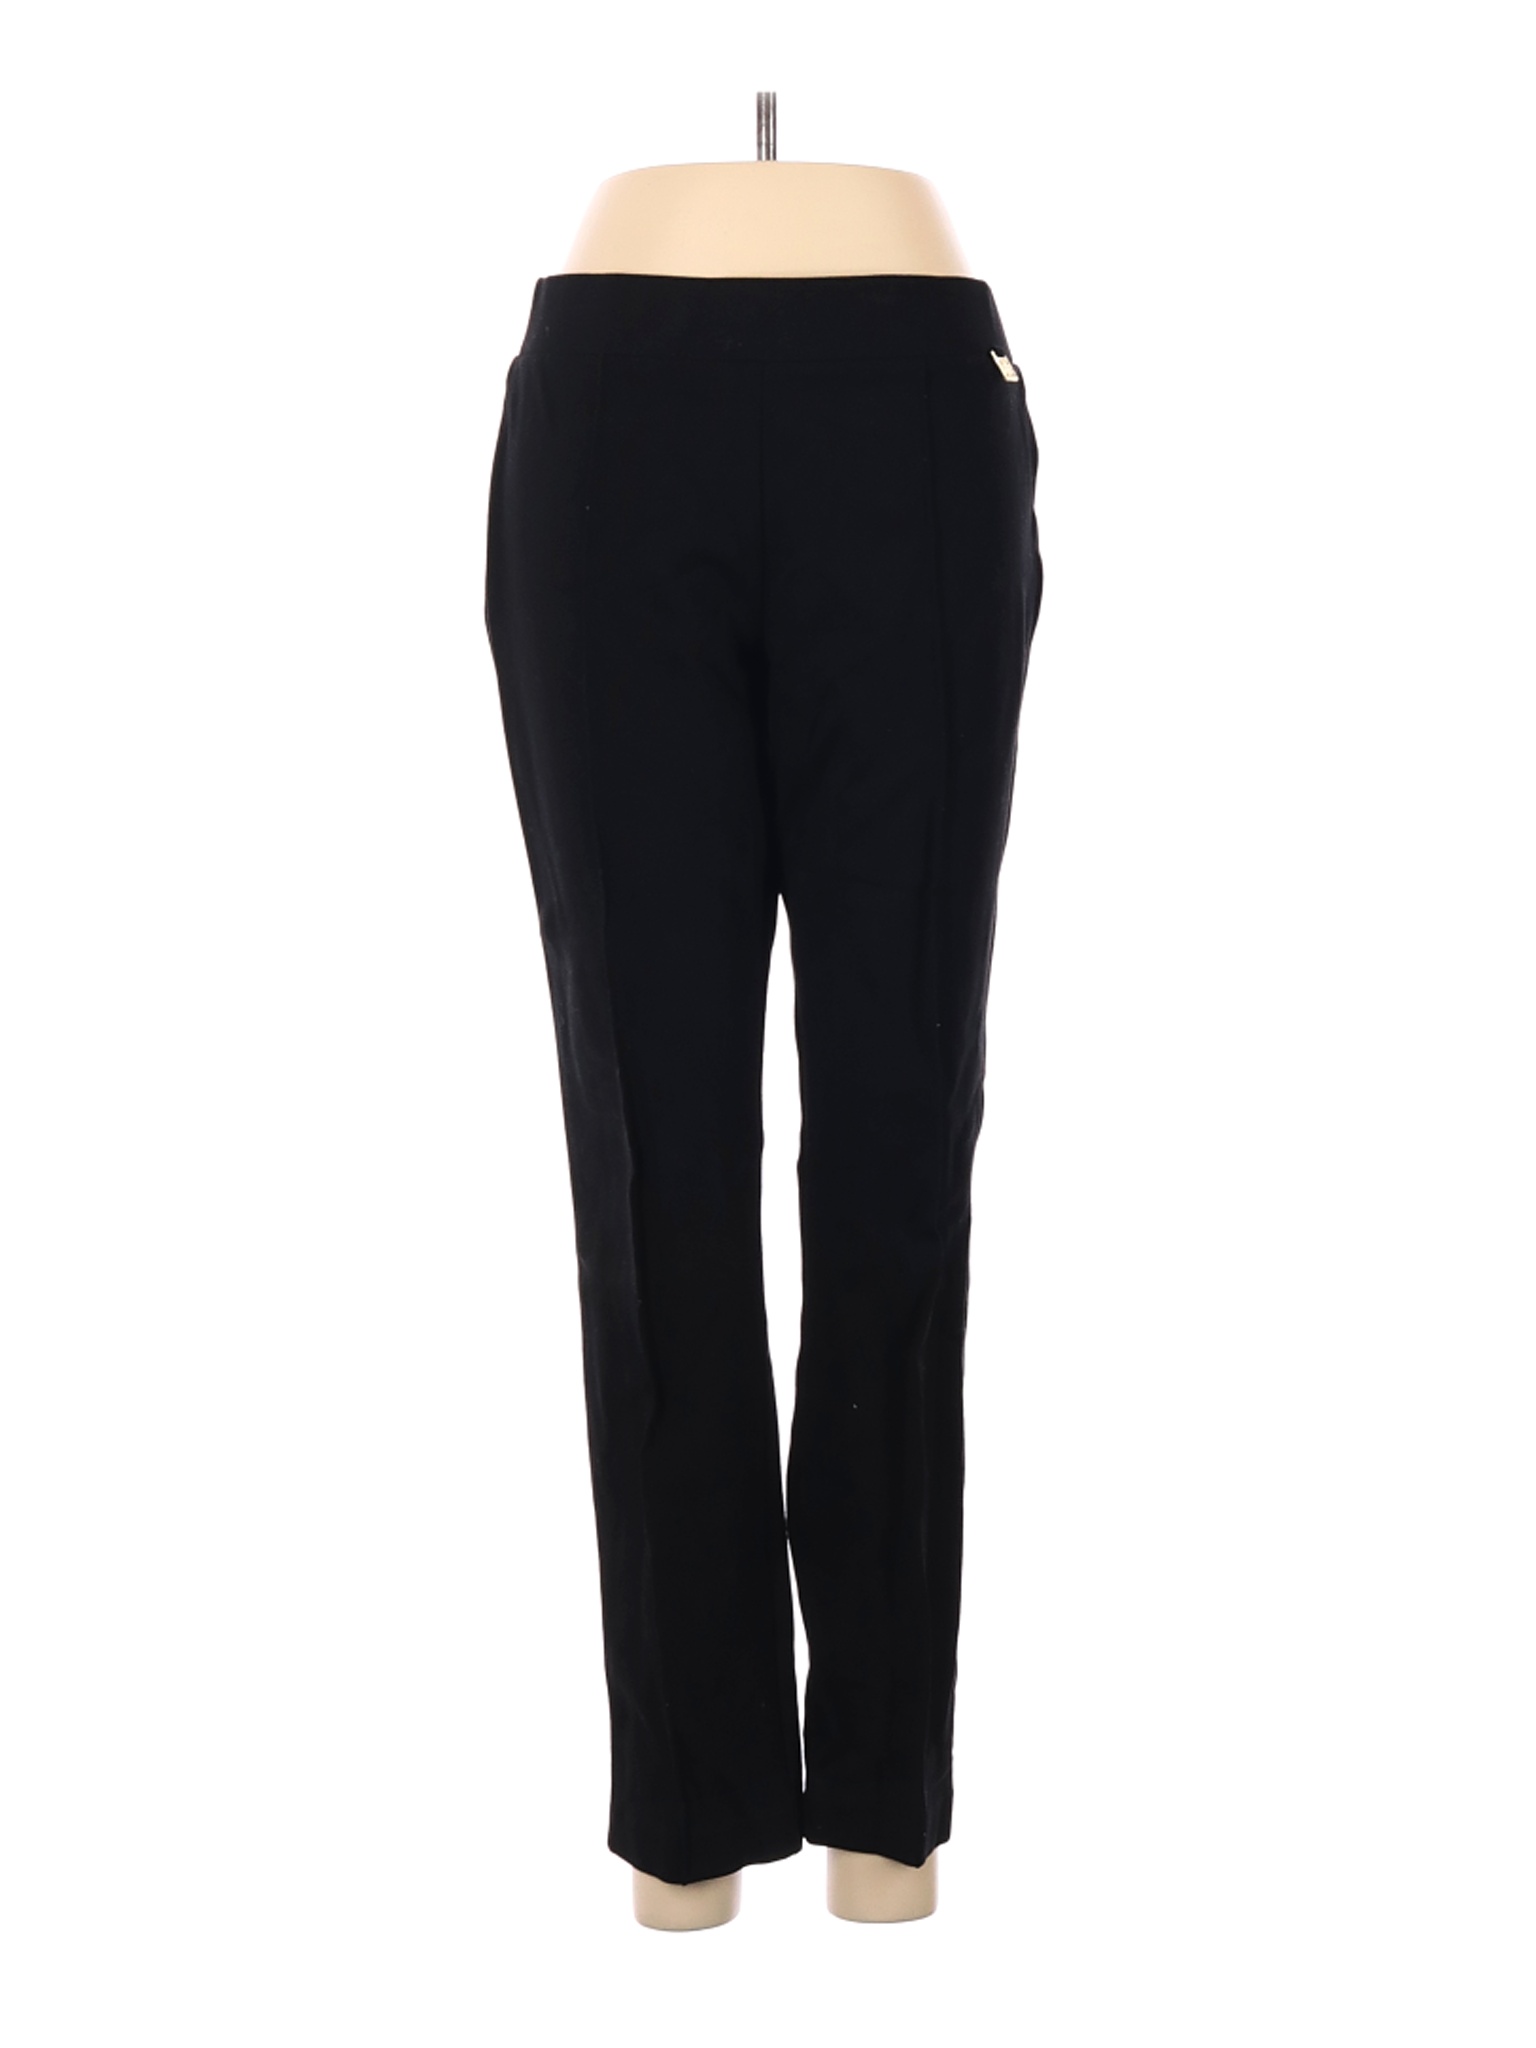 Anne Klein Women Black Casual Pants 8 | eBay